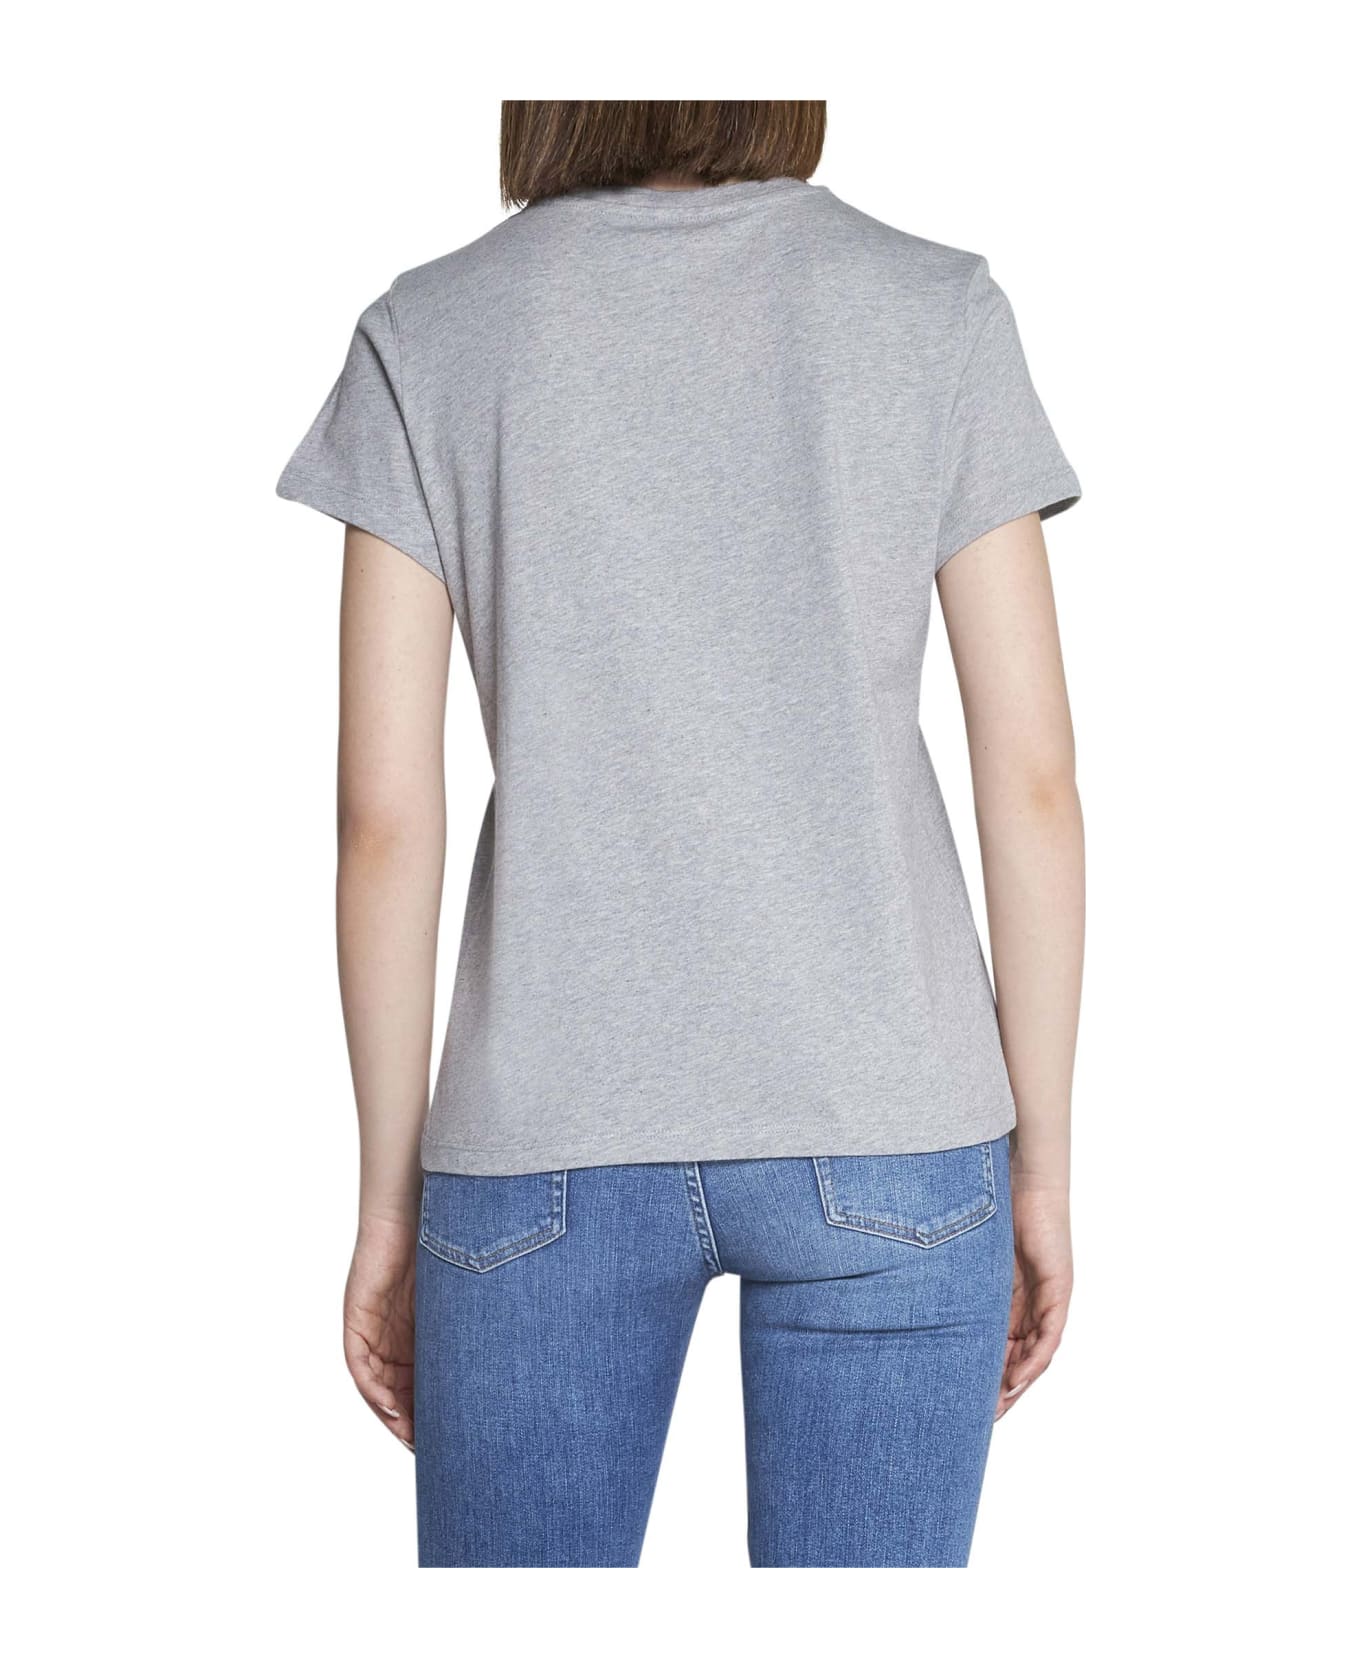 A.P.C. Signature T-shirt - Heathered light grey Tシャツ